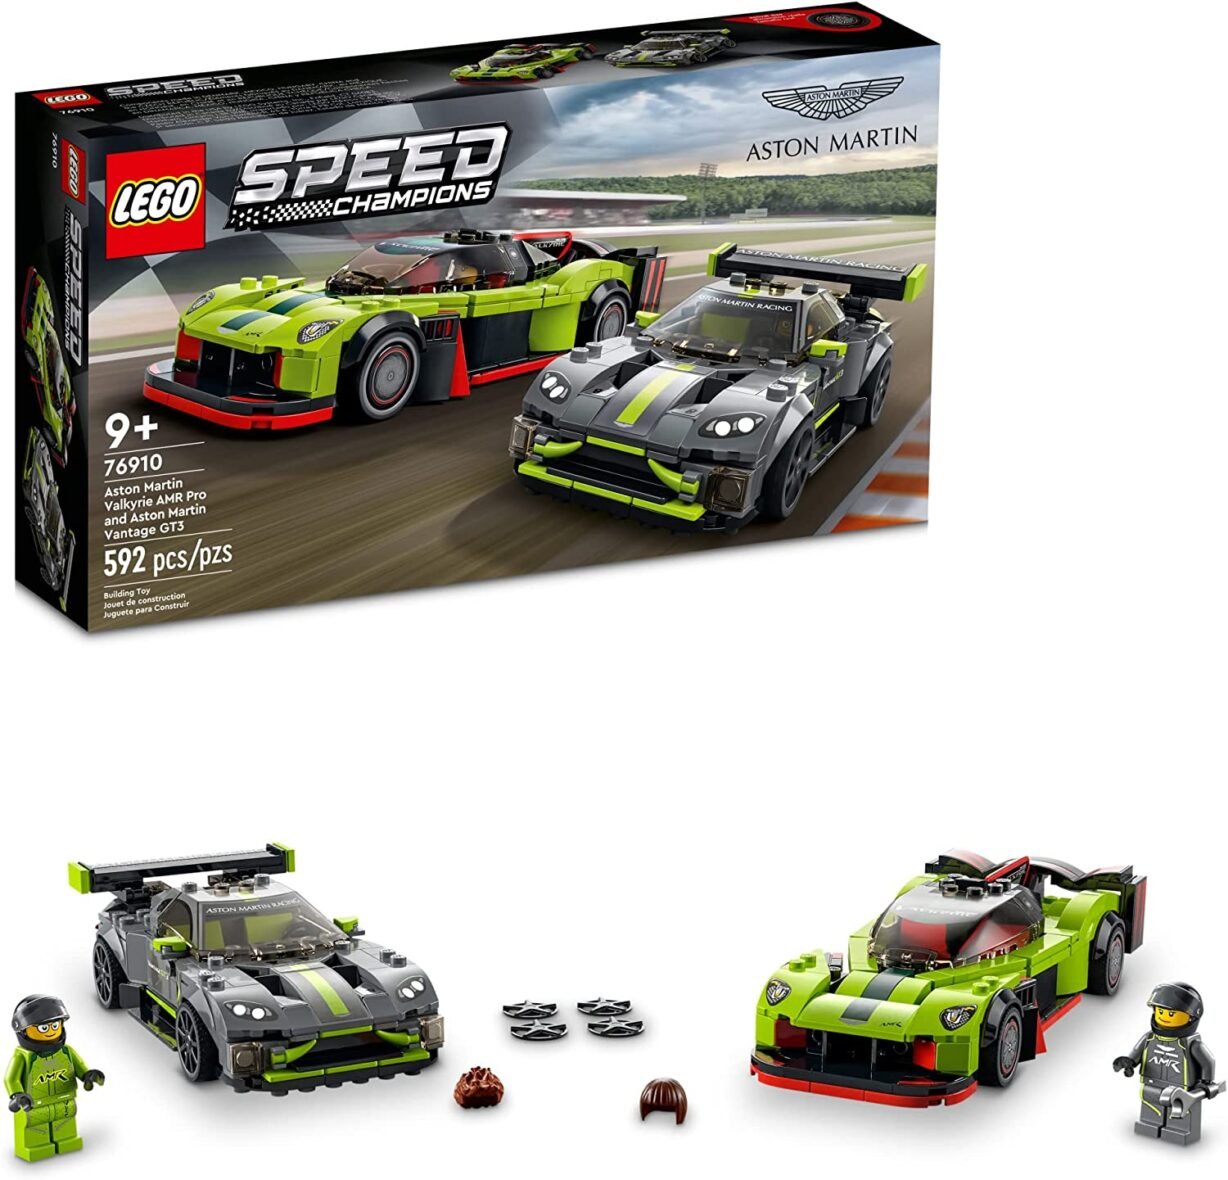 LEGO Speed Champions Aston Martin Valkyrie AMR Pro and Aston Martin Vantage GT3 76910 Building Kit (592 Pieces)